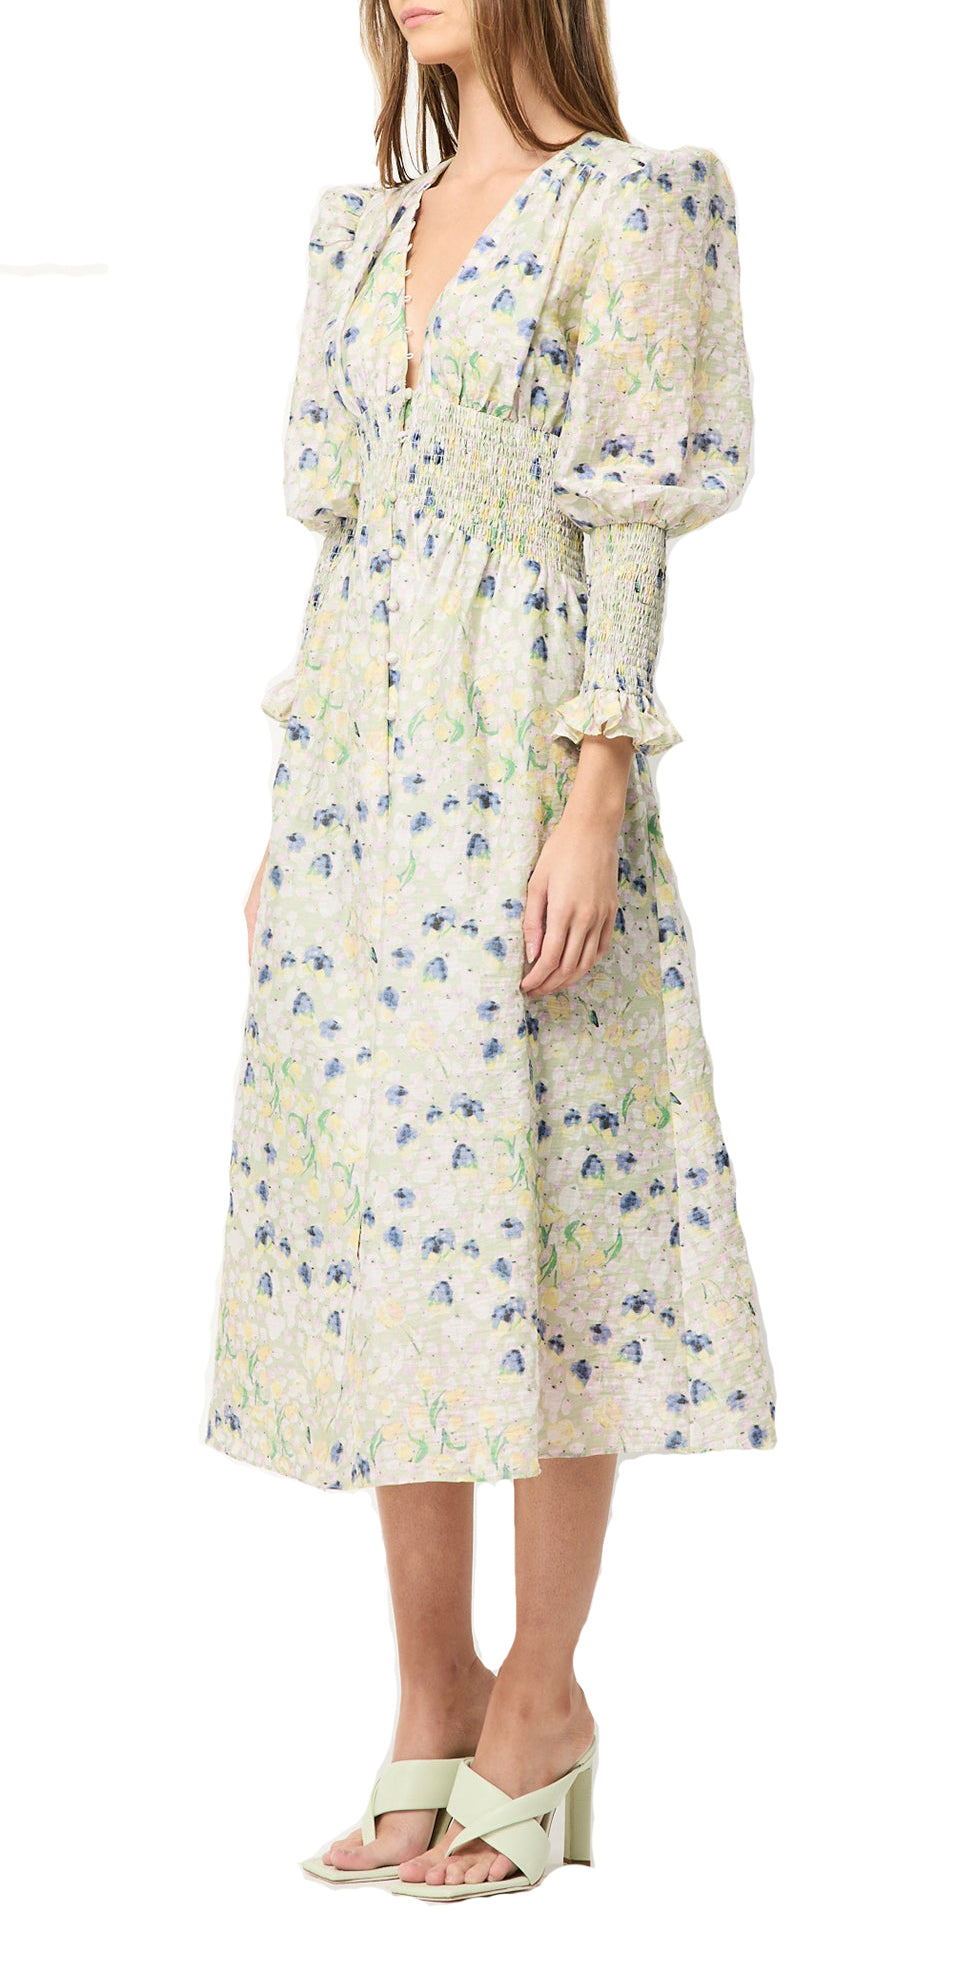 Elliatt Matria Floral Pastel Dress